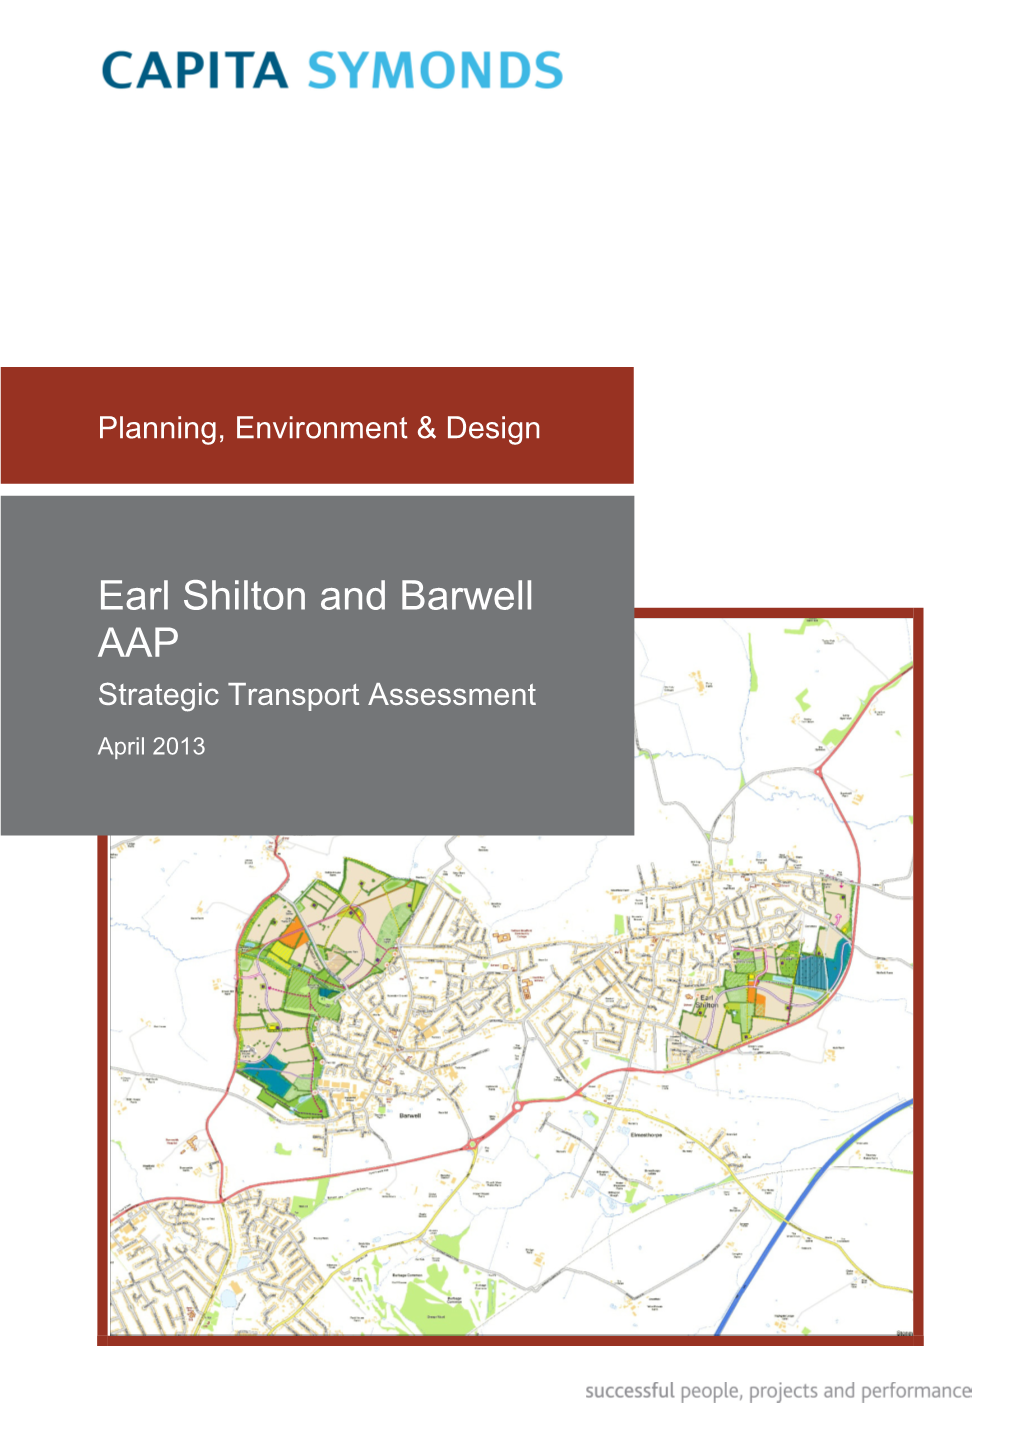 Earl Shilton and Barwell AAP Strategic Transport Assessment April 2013